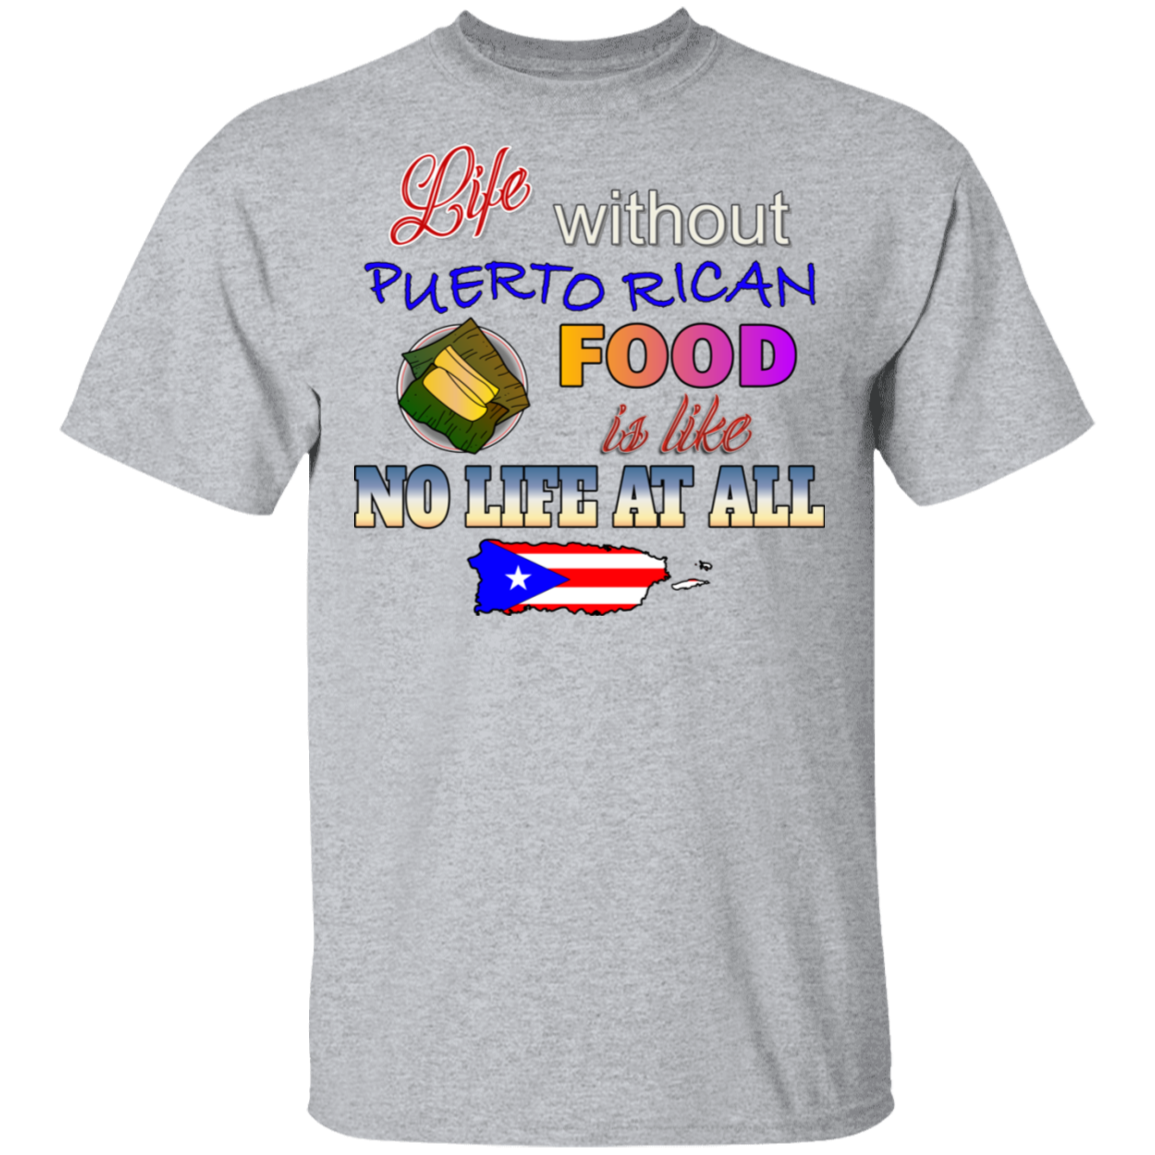 Life W/O PR Food 5.3 oz. T-Shirt - Puerto Rican Pride